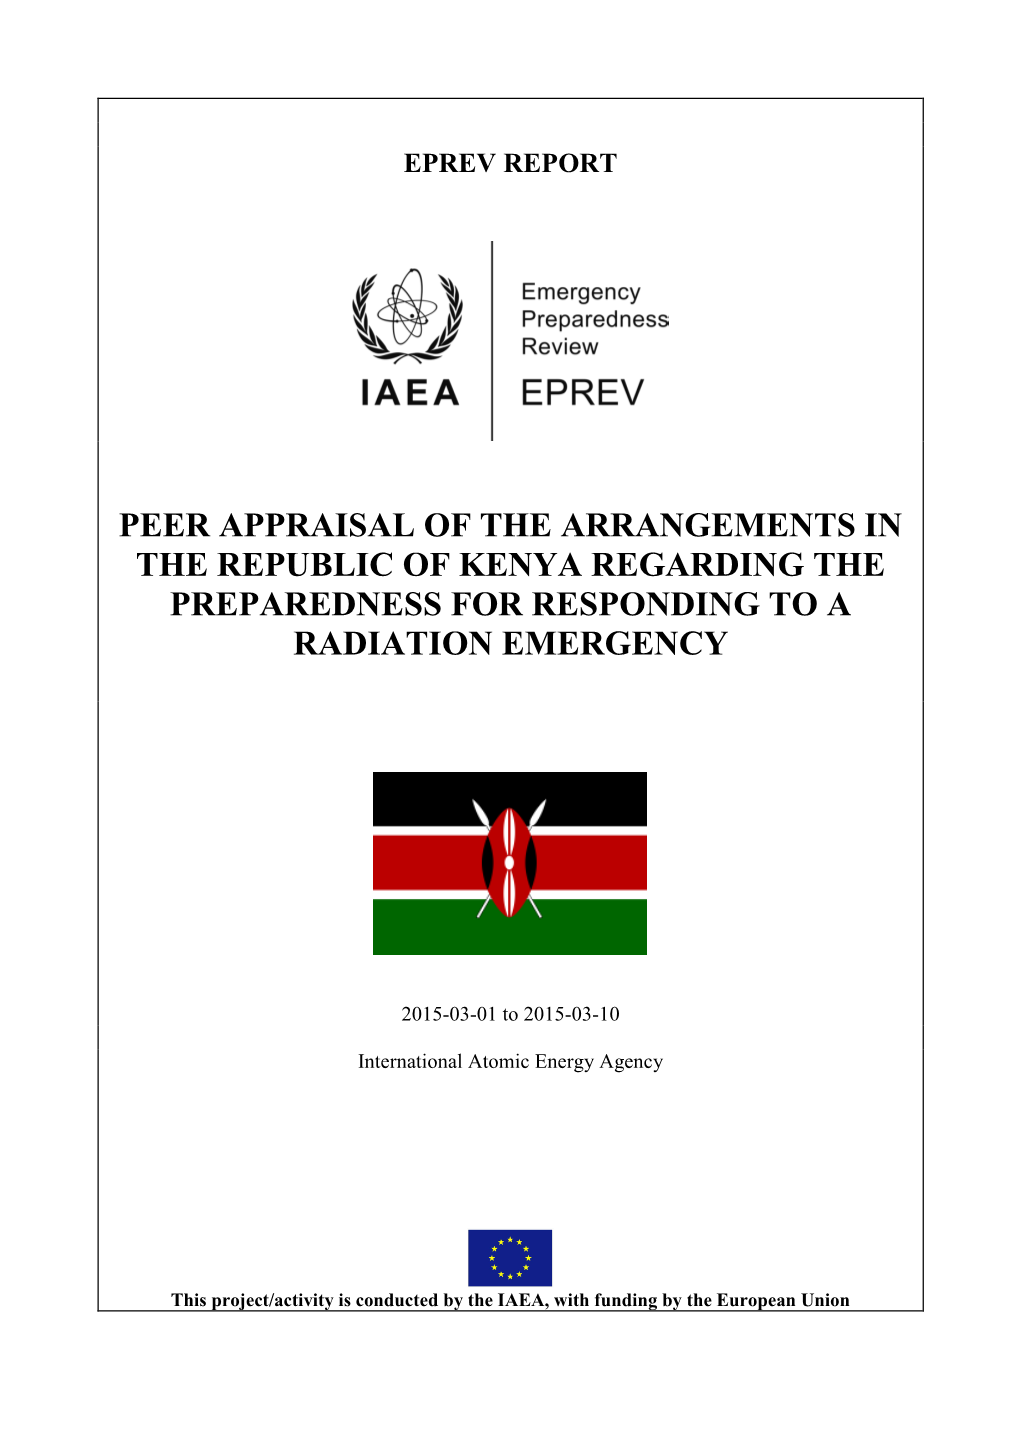 Peer Appraisal of the Arrangements in the Republic of Kenya Regarding the Preparedness for Responding to a Radiation Emergency